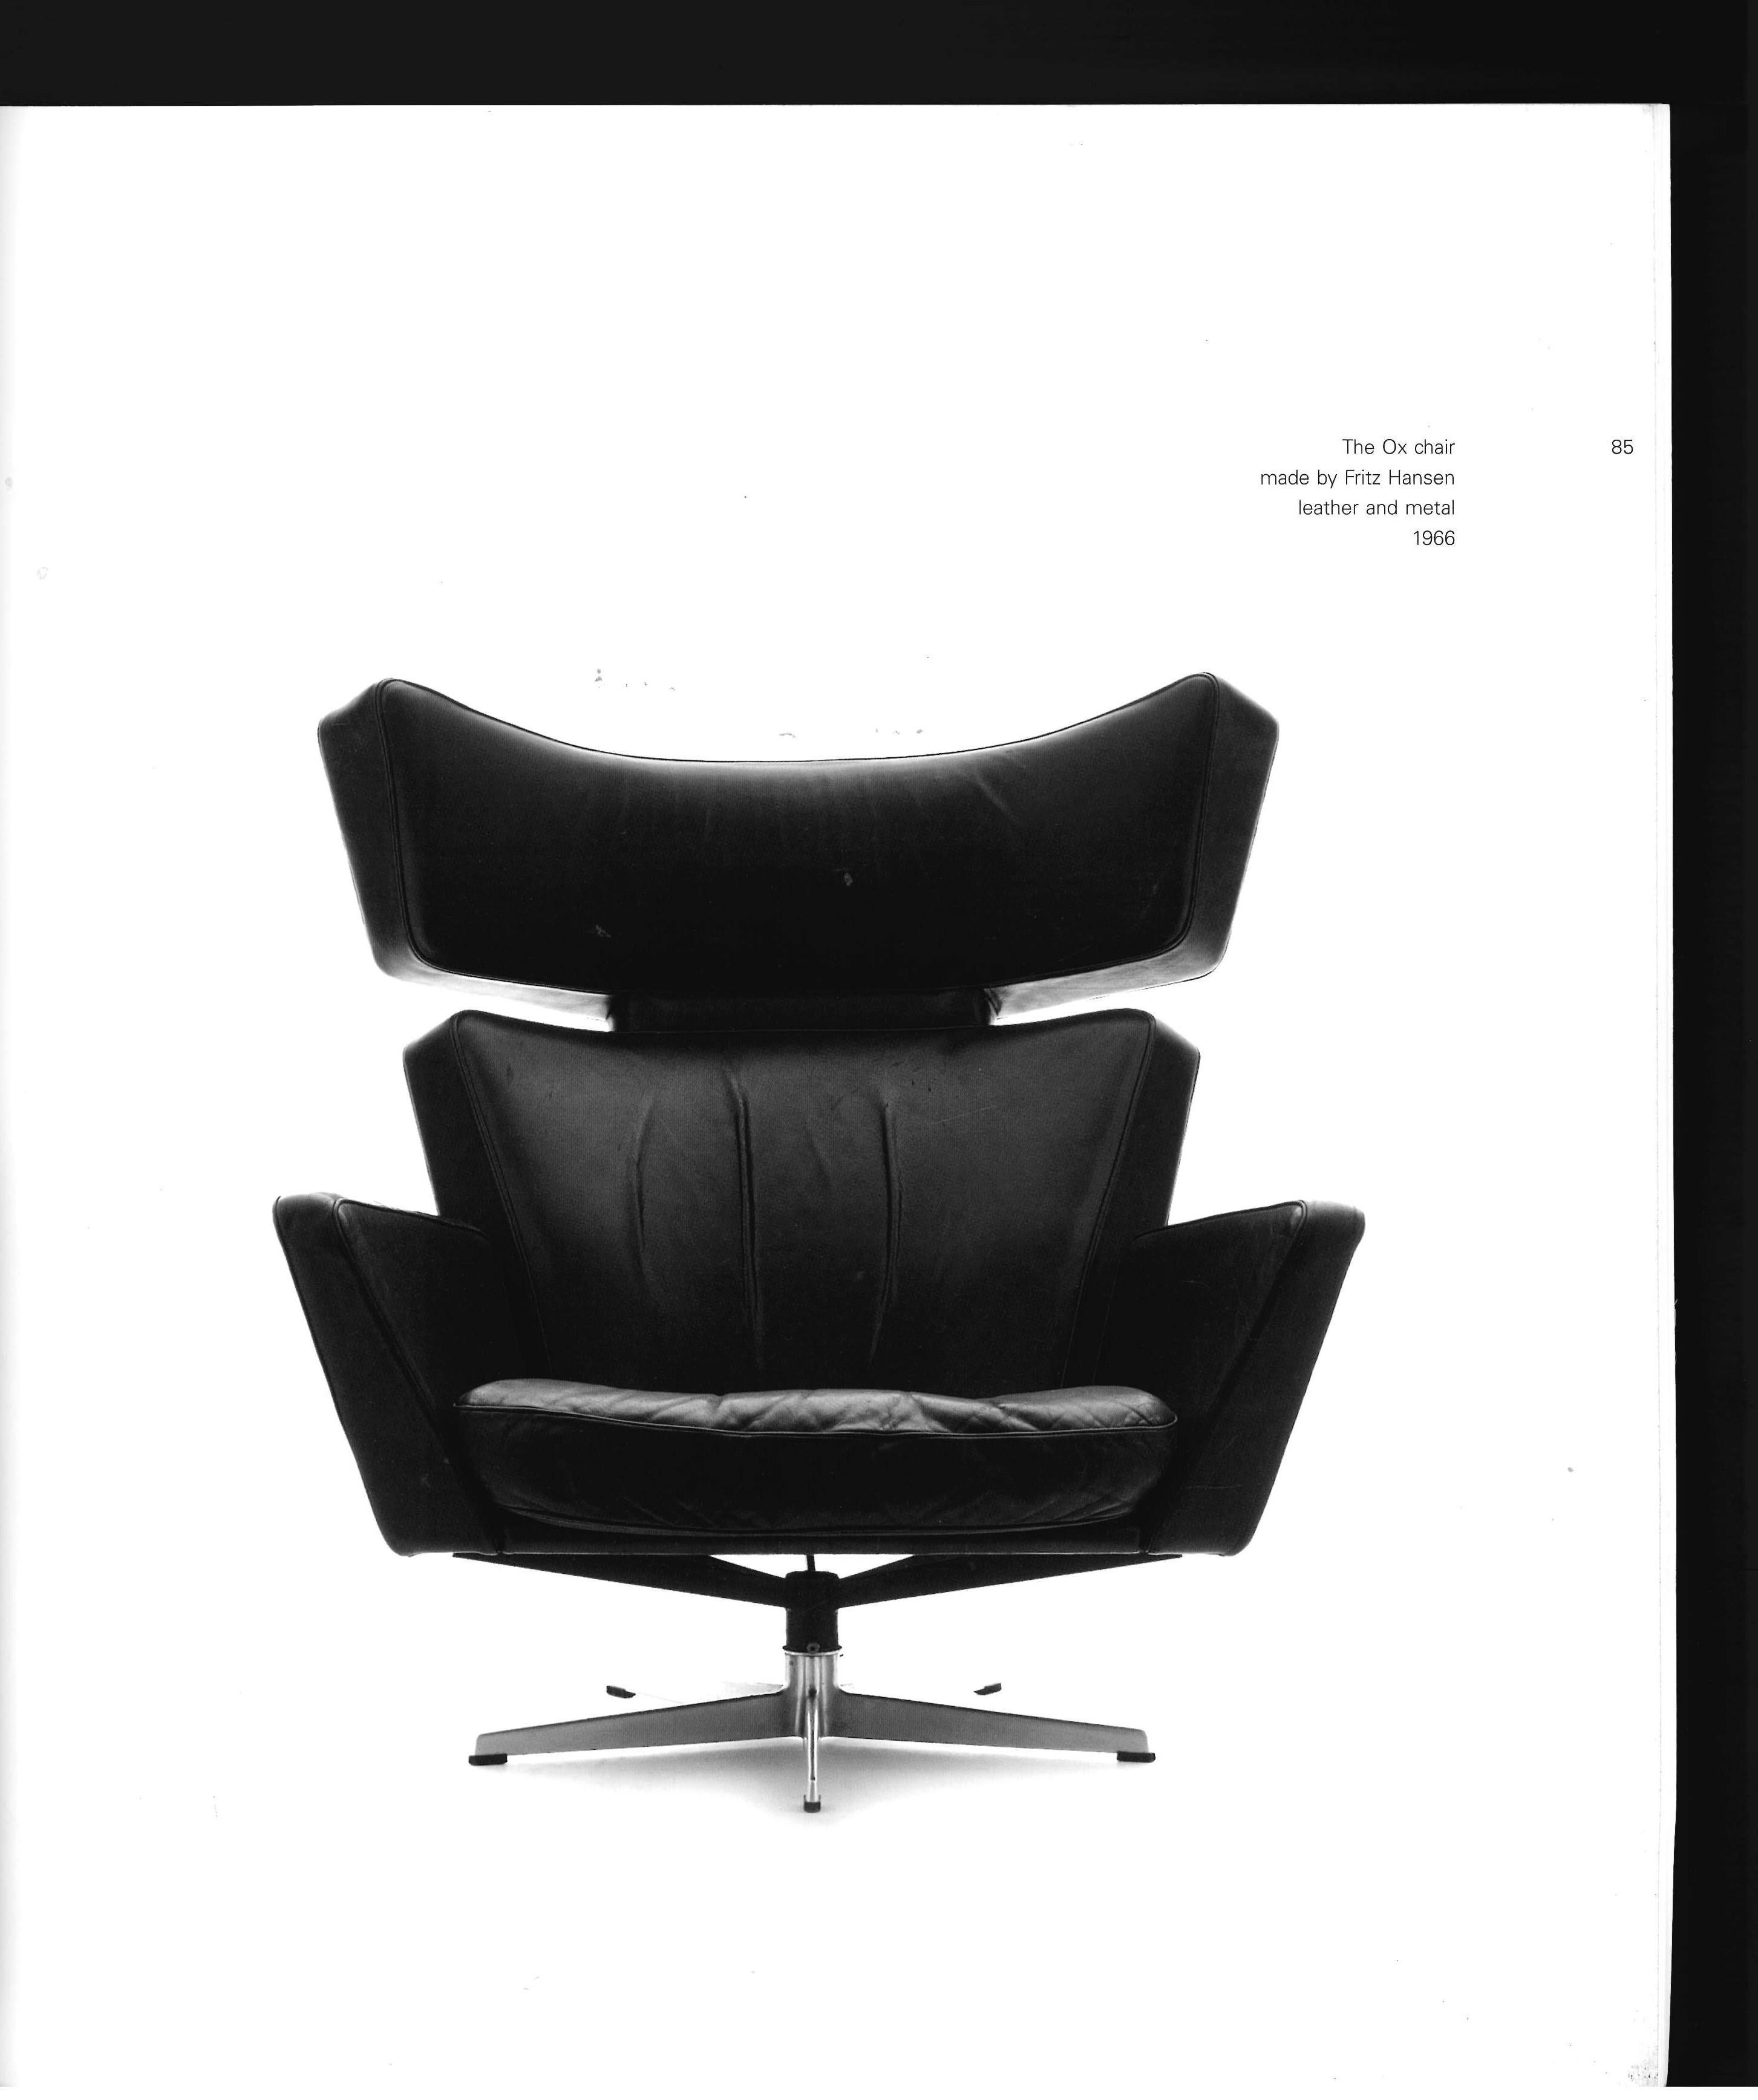 Arne Jacobsen Furniture Designs, Book 4